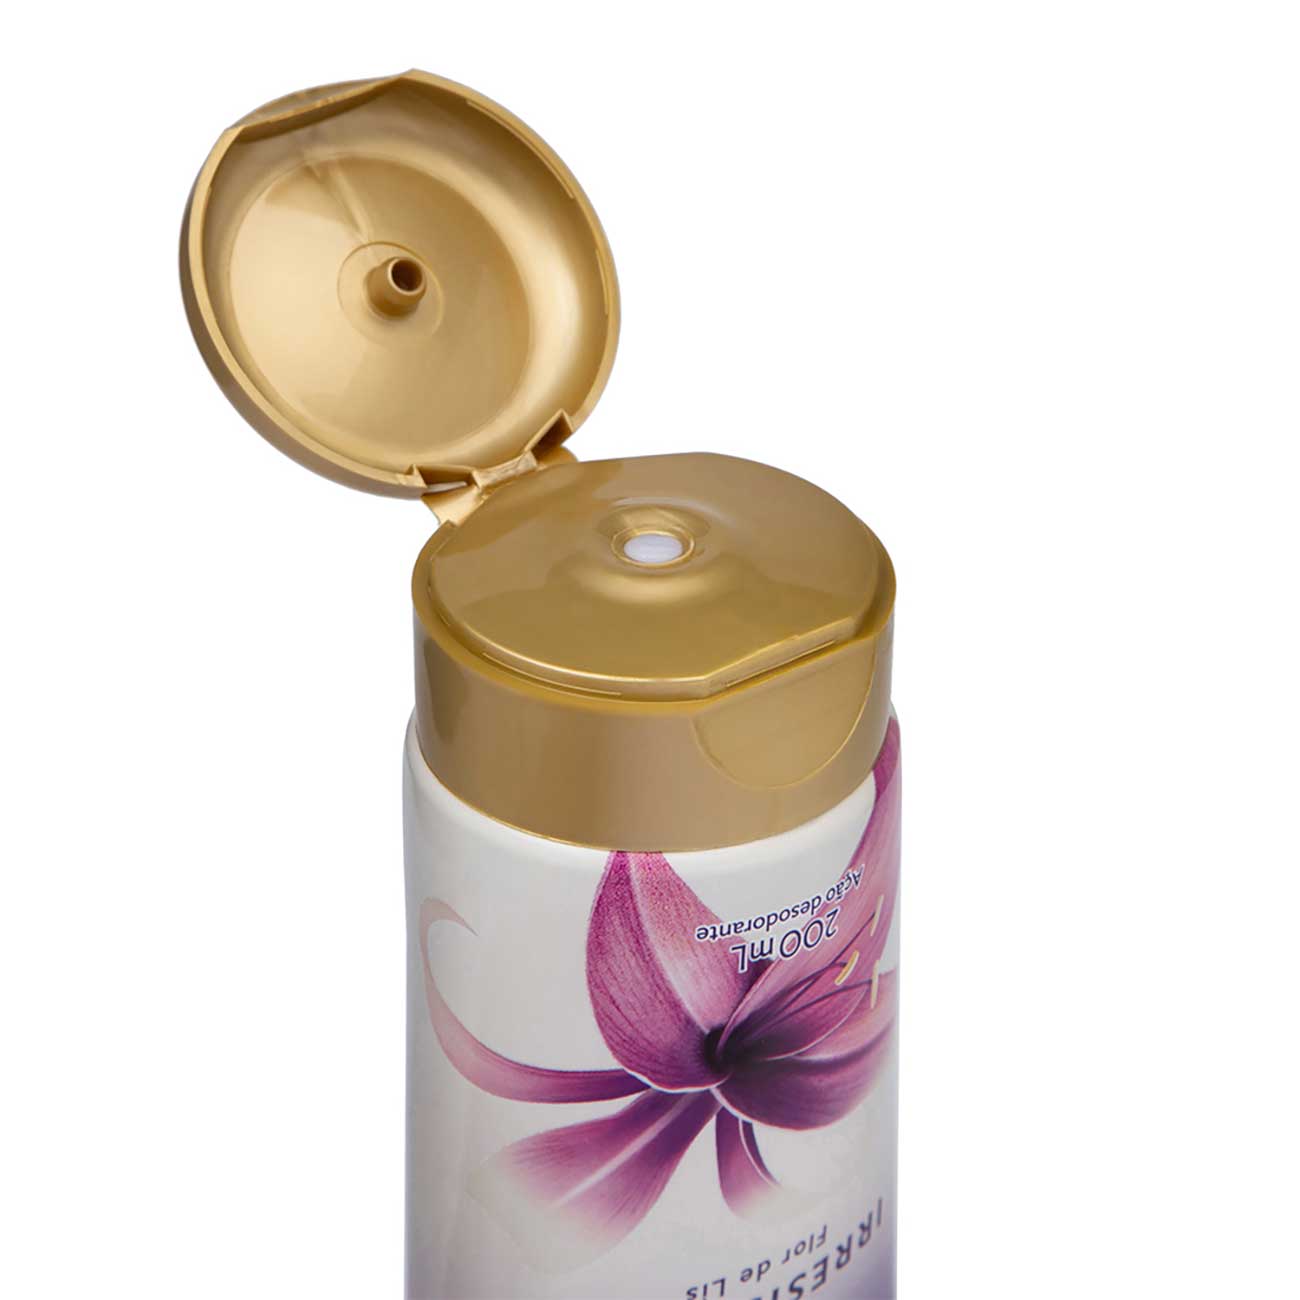 Loo Hidratante Ultracremosa Paixo Irresistvel Flor de Lis 200mL com ao desodorante